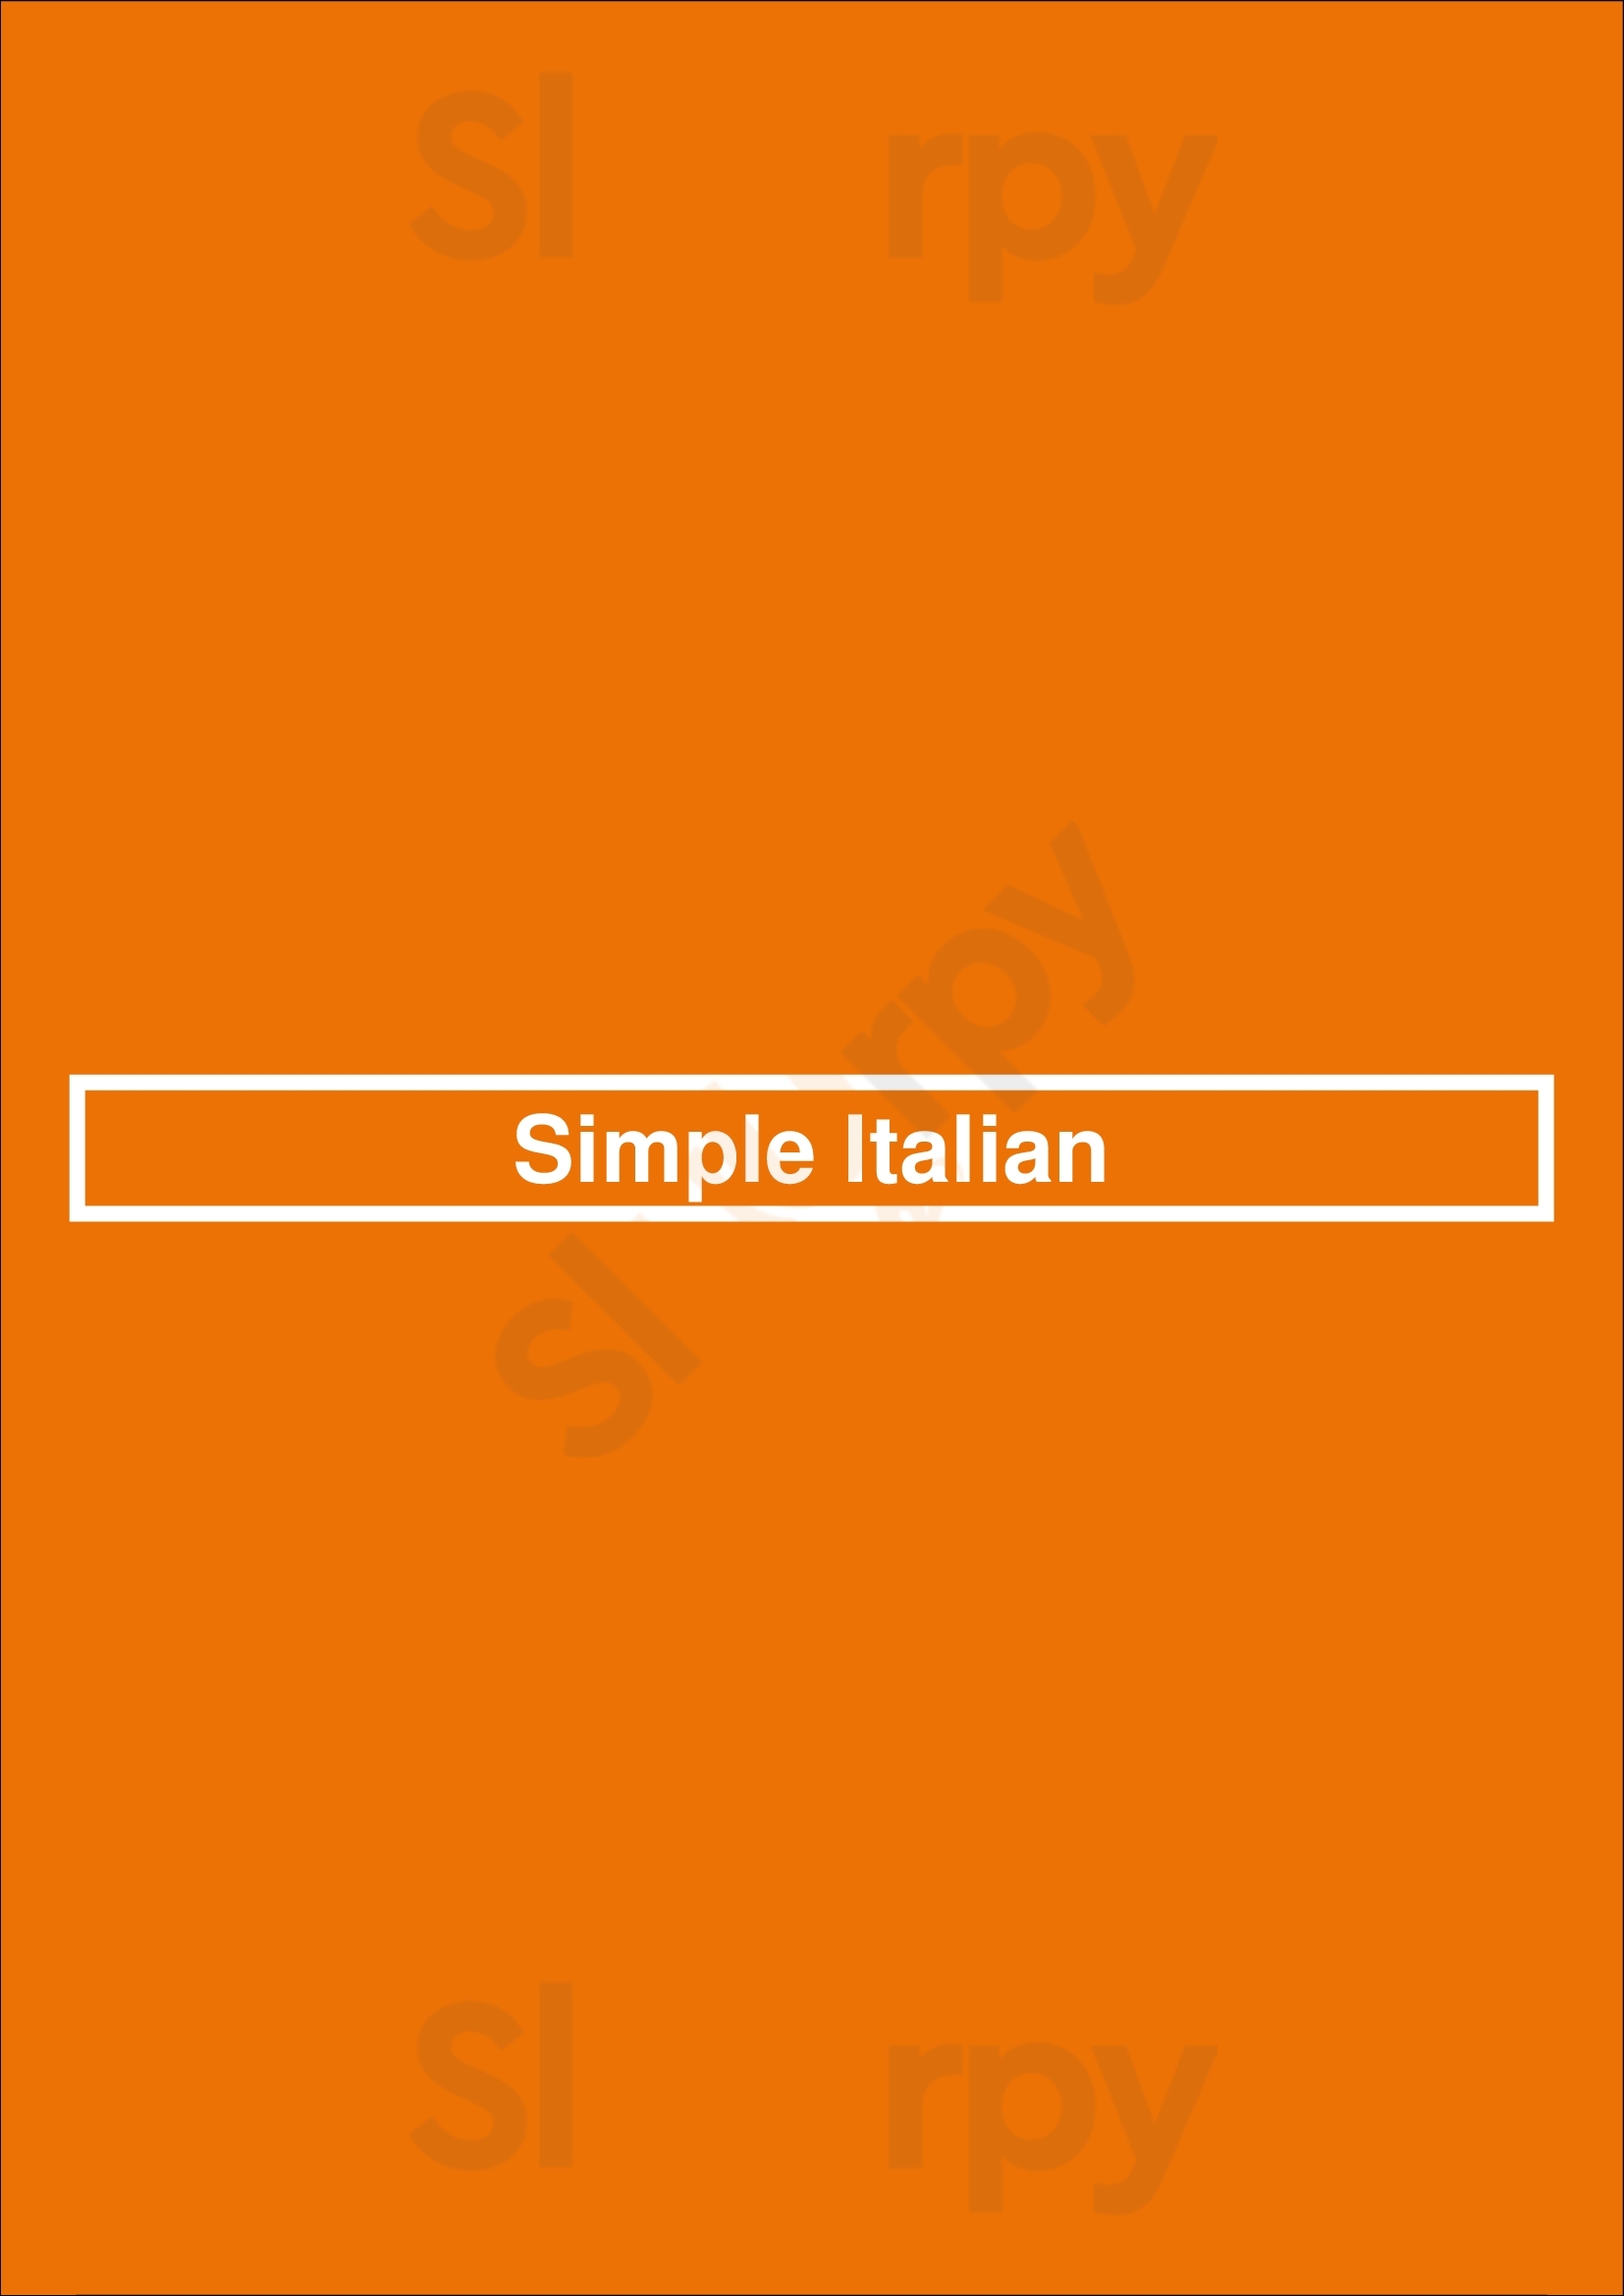 Simple Italian Cucina Pizzeria Perth Menu - 1